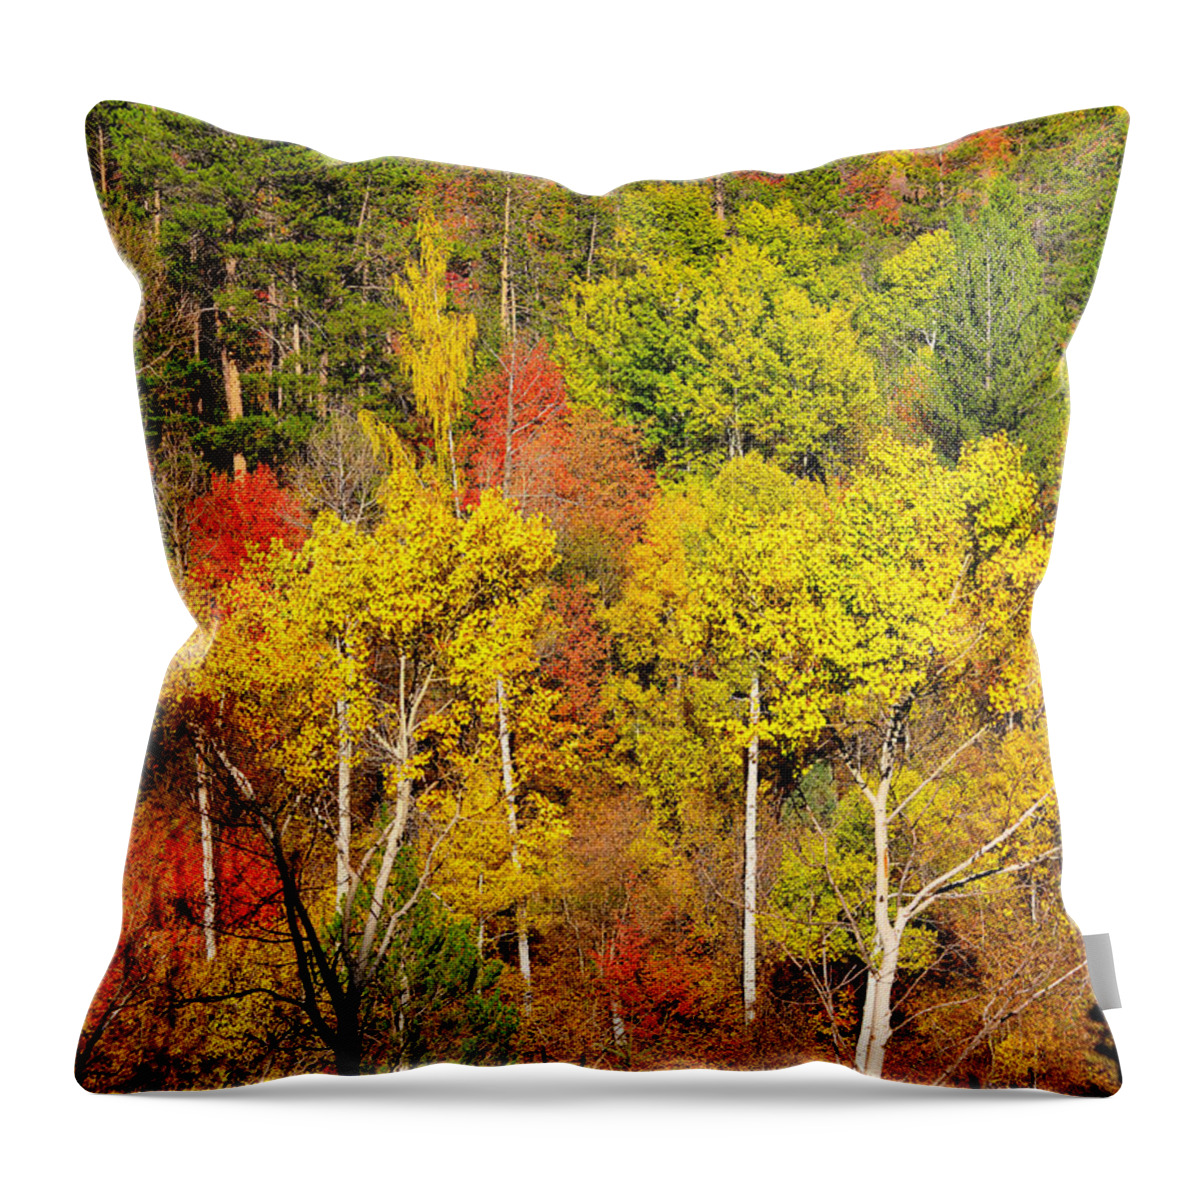 Autumn Throw Pillow featuring the photograph Autumn Splendor by Greg Norrell